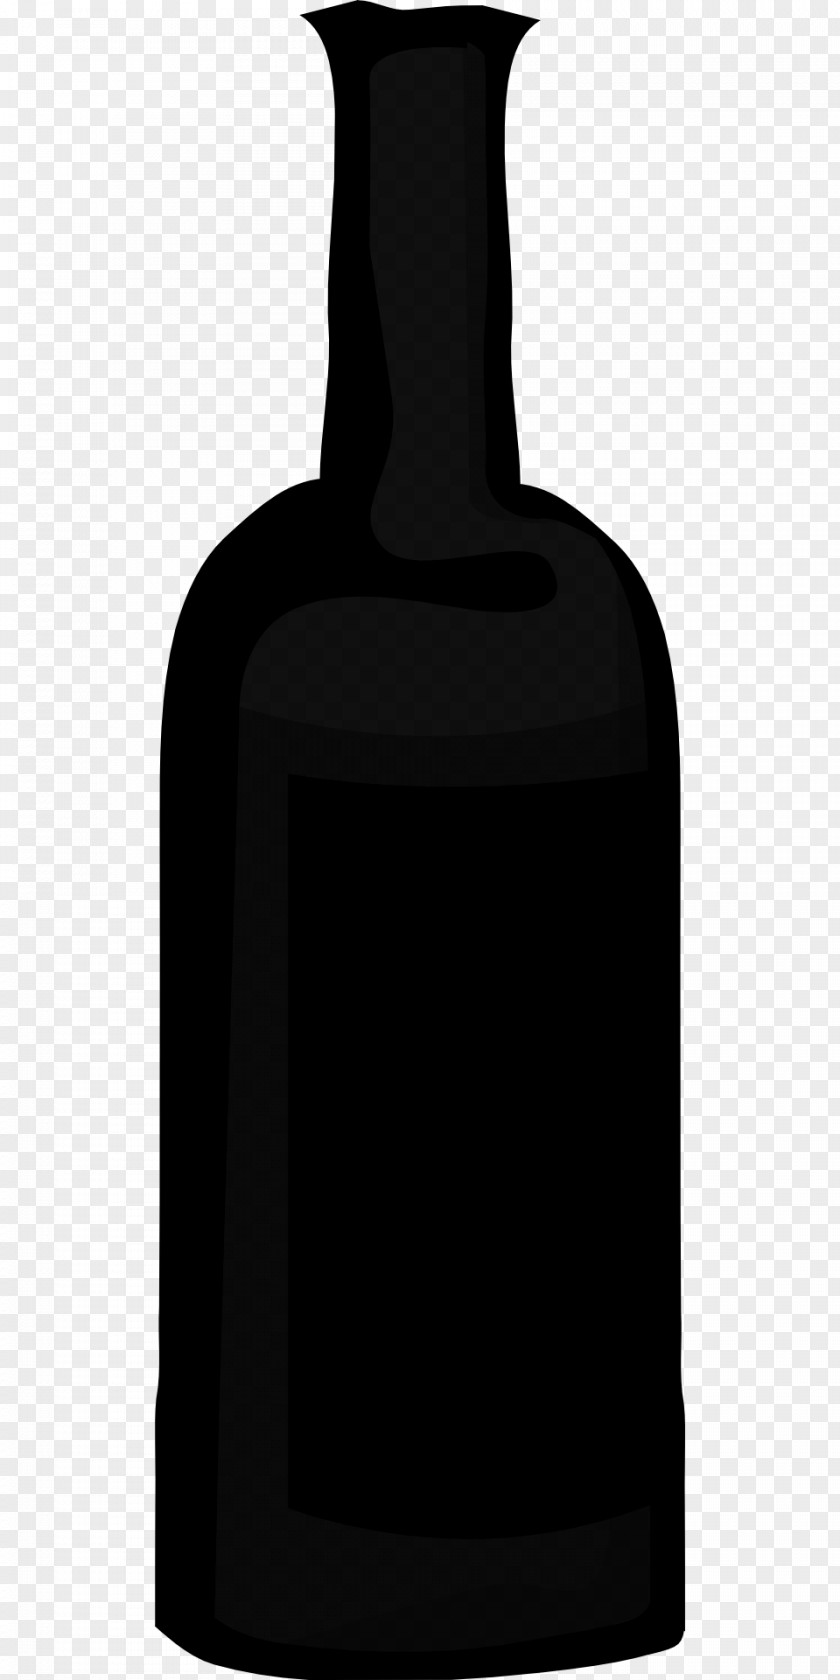 Bottle Wine Beer Alcoholic Drink PNG